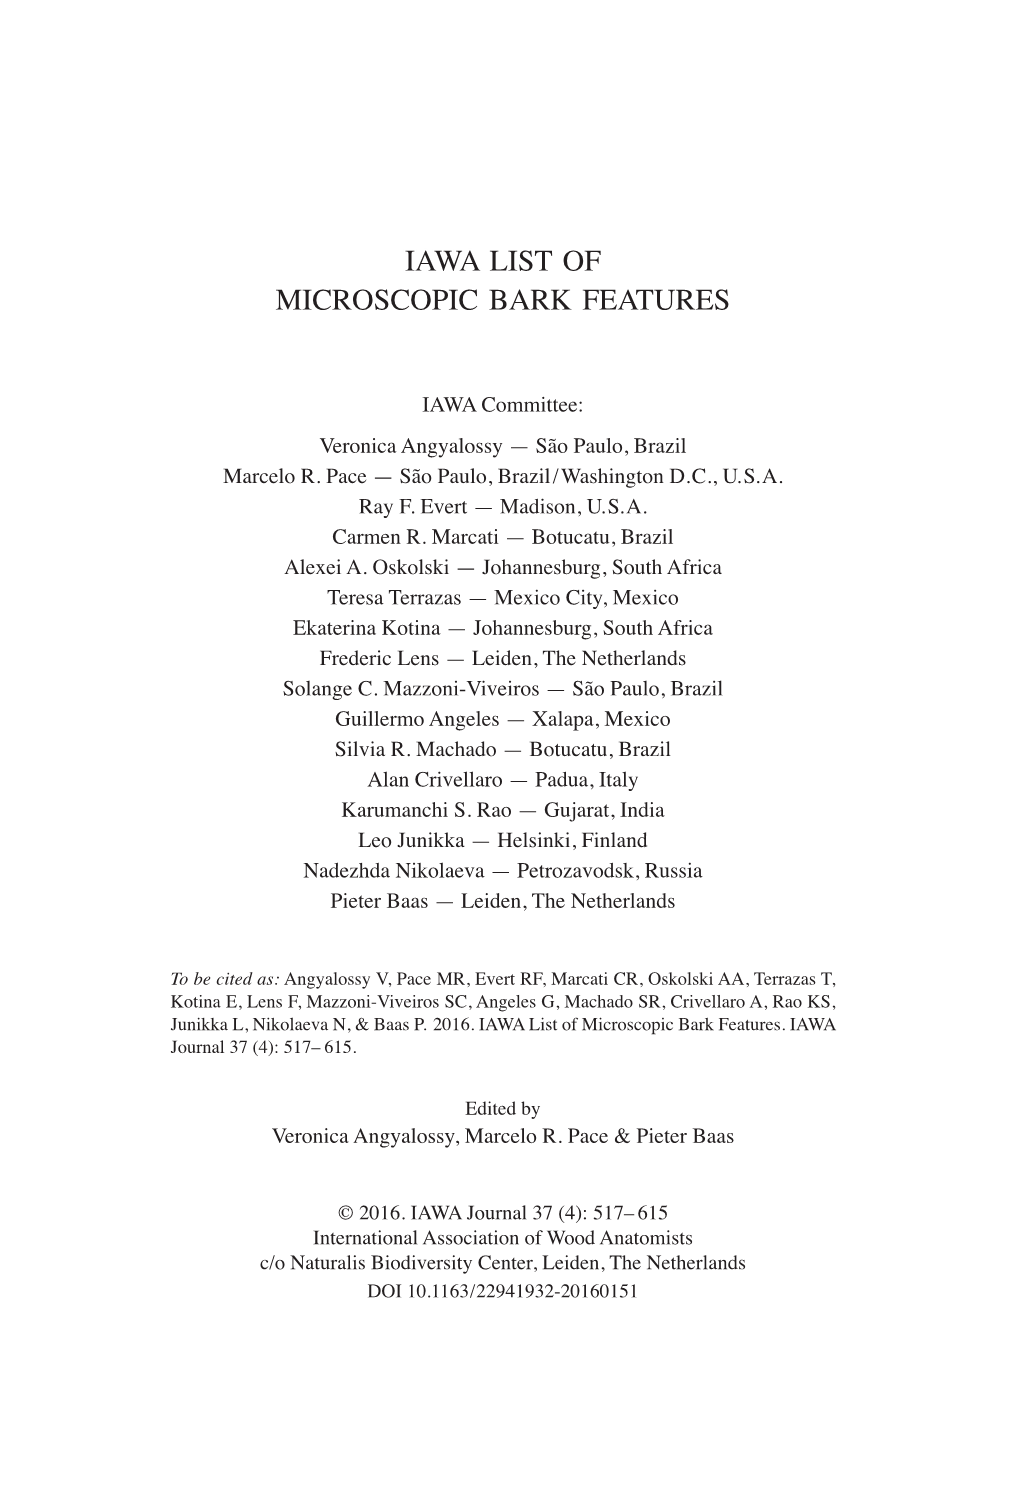 IAWA List of Microscopic Bark Features 517